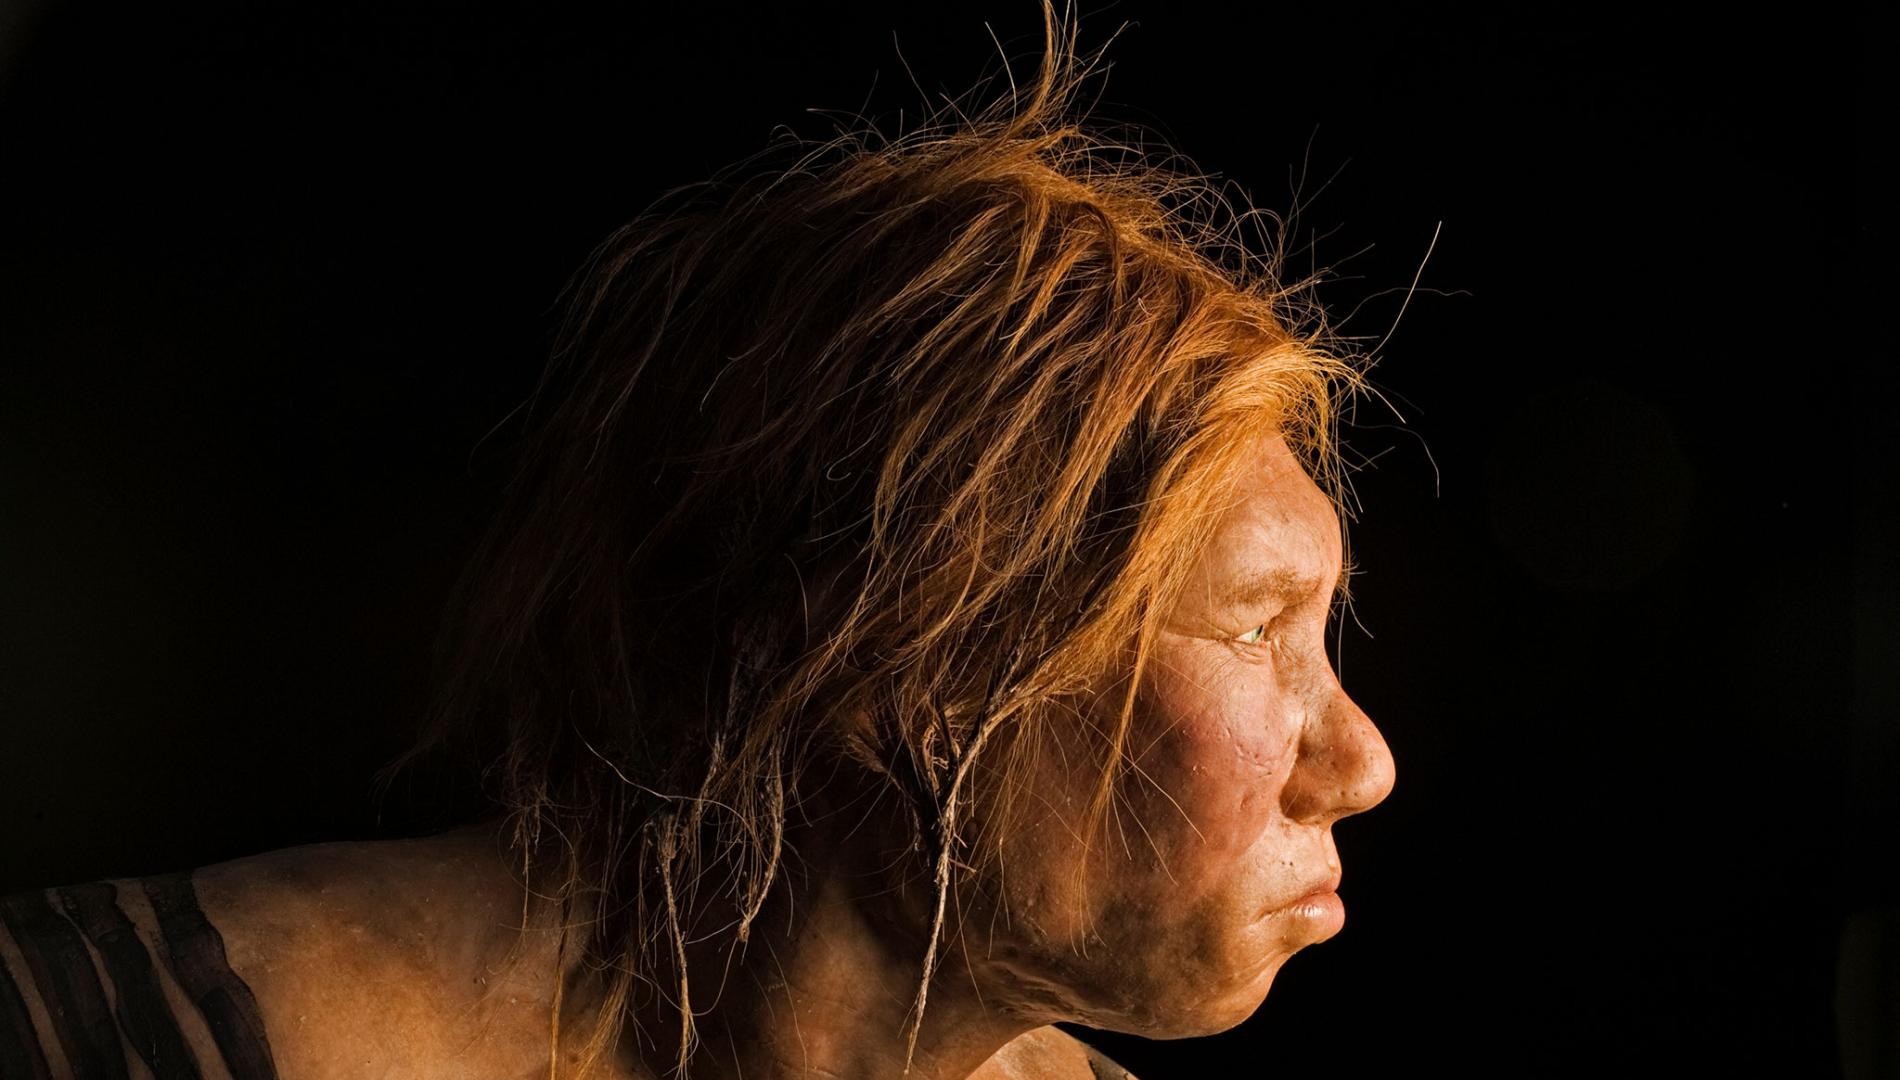 Tko je ubio neandertalca?